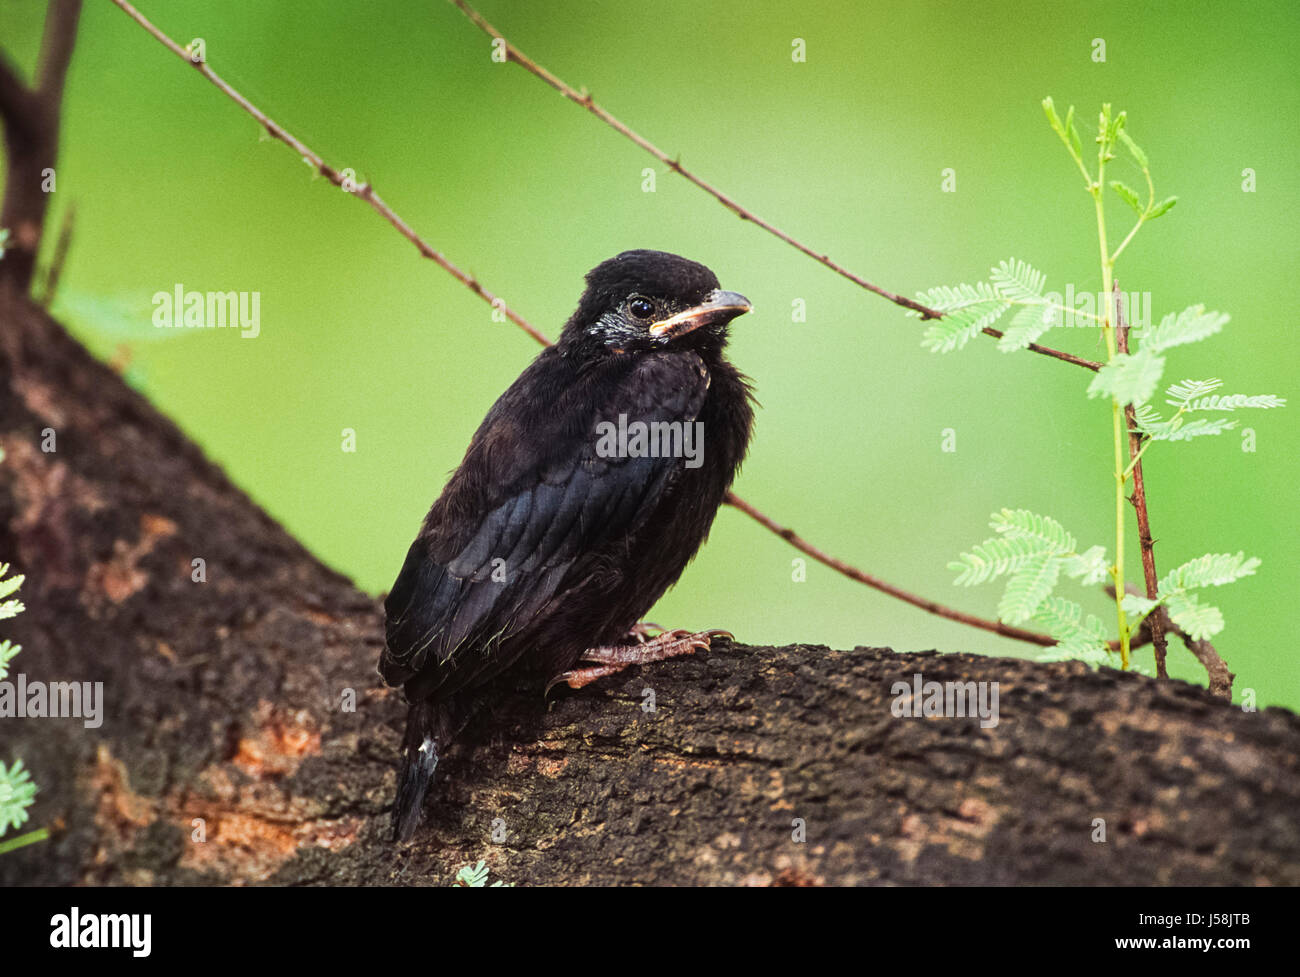 Black Drongo fledgling, Dicrurus macrocercus,perched on branch, Keoladeo Ghana National Park, Bharatpur, Rajasthan, India Stock Photo